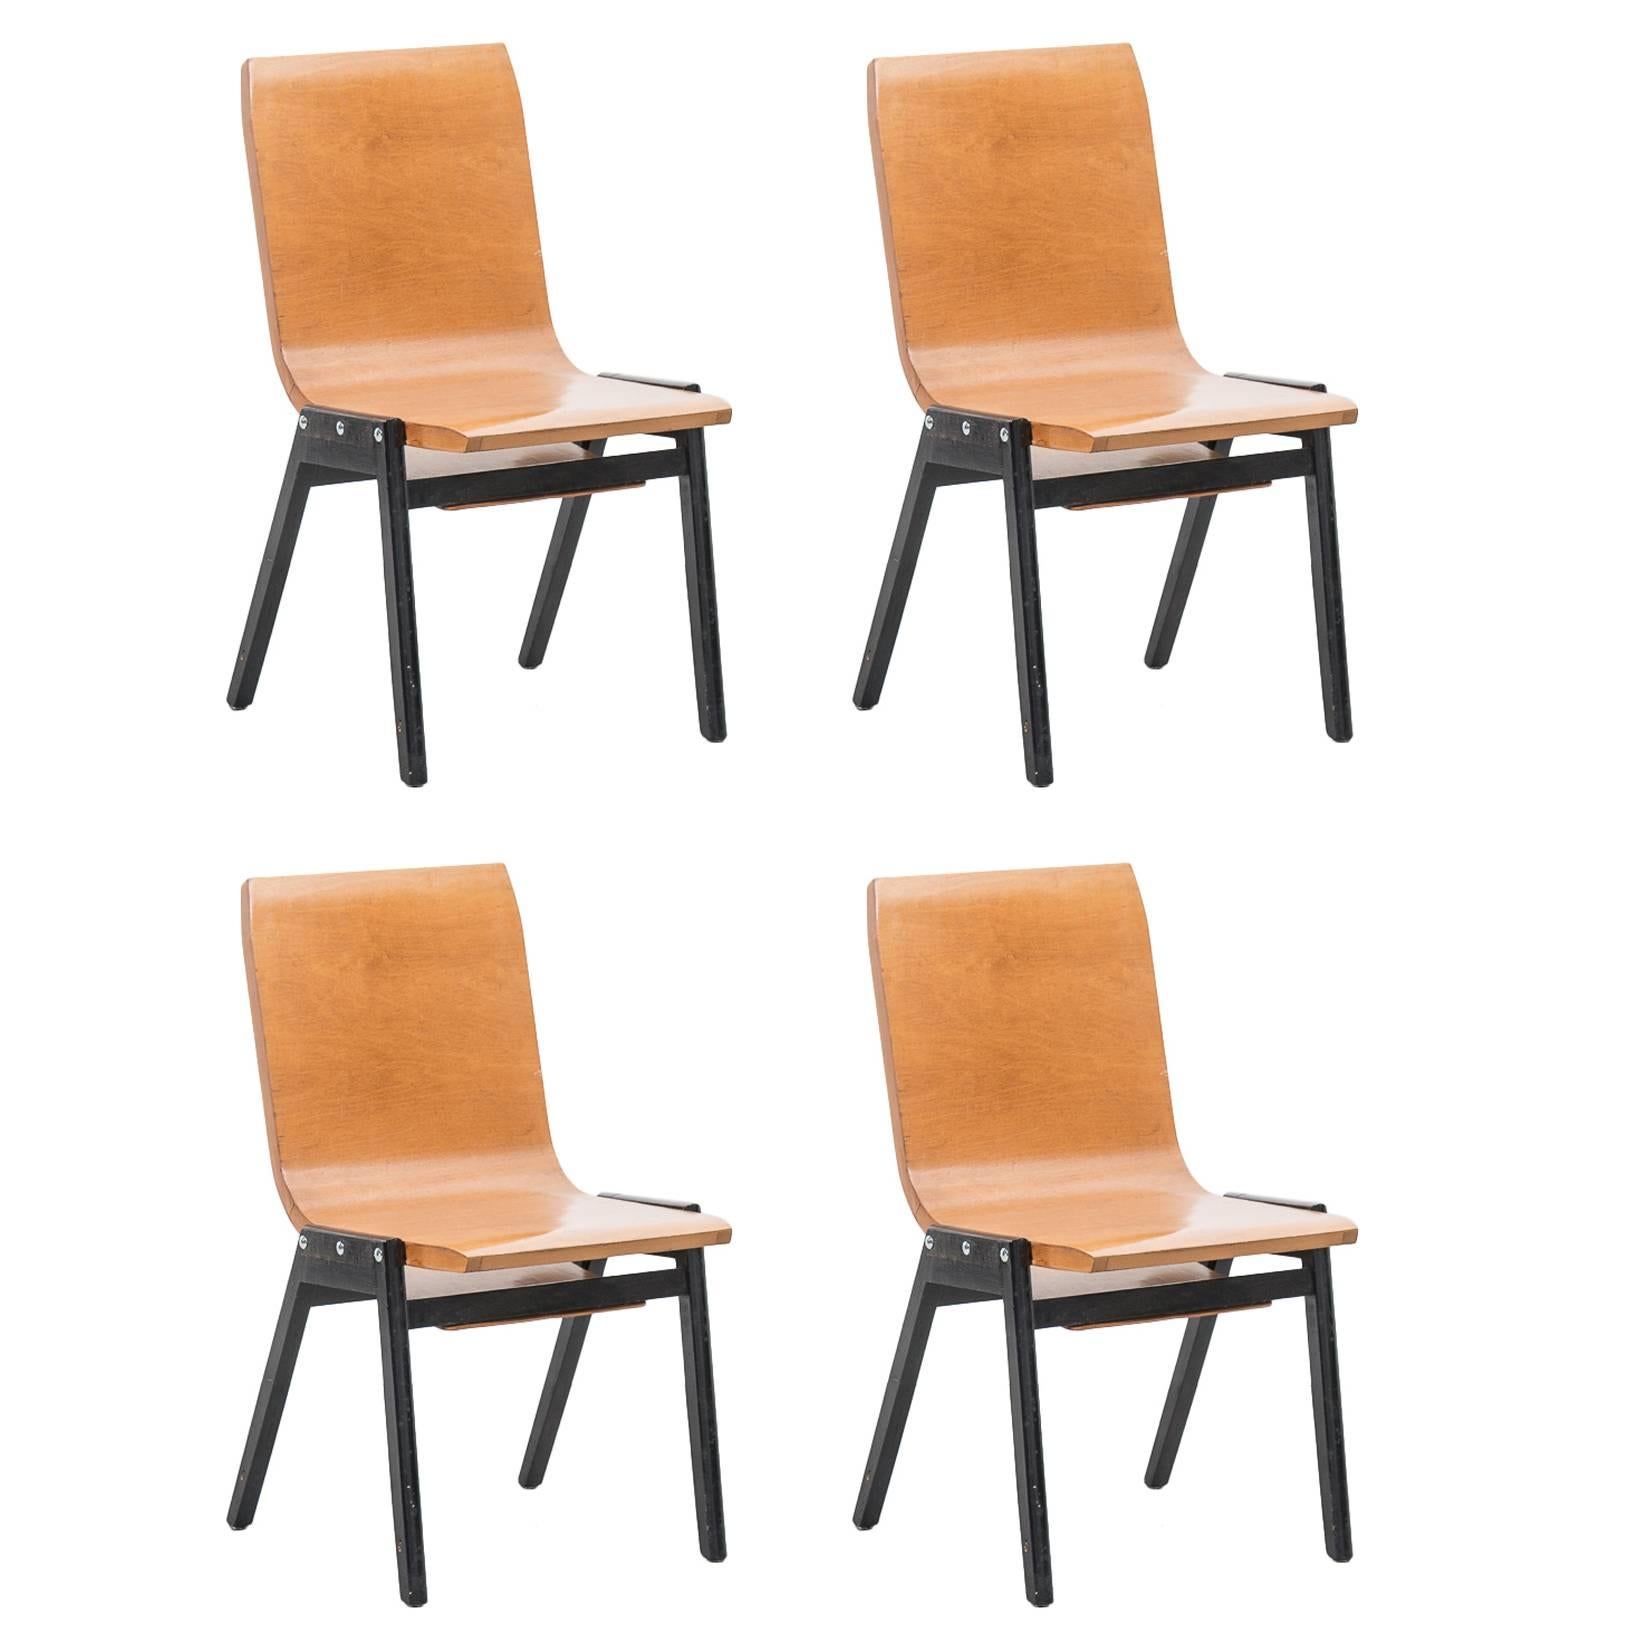 Roland Rainer Modernist Church Chairs, E & A Pollack, Switzerland, 1956